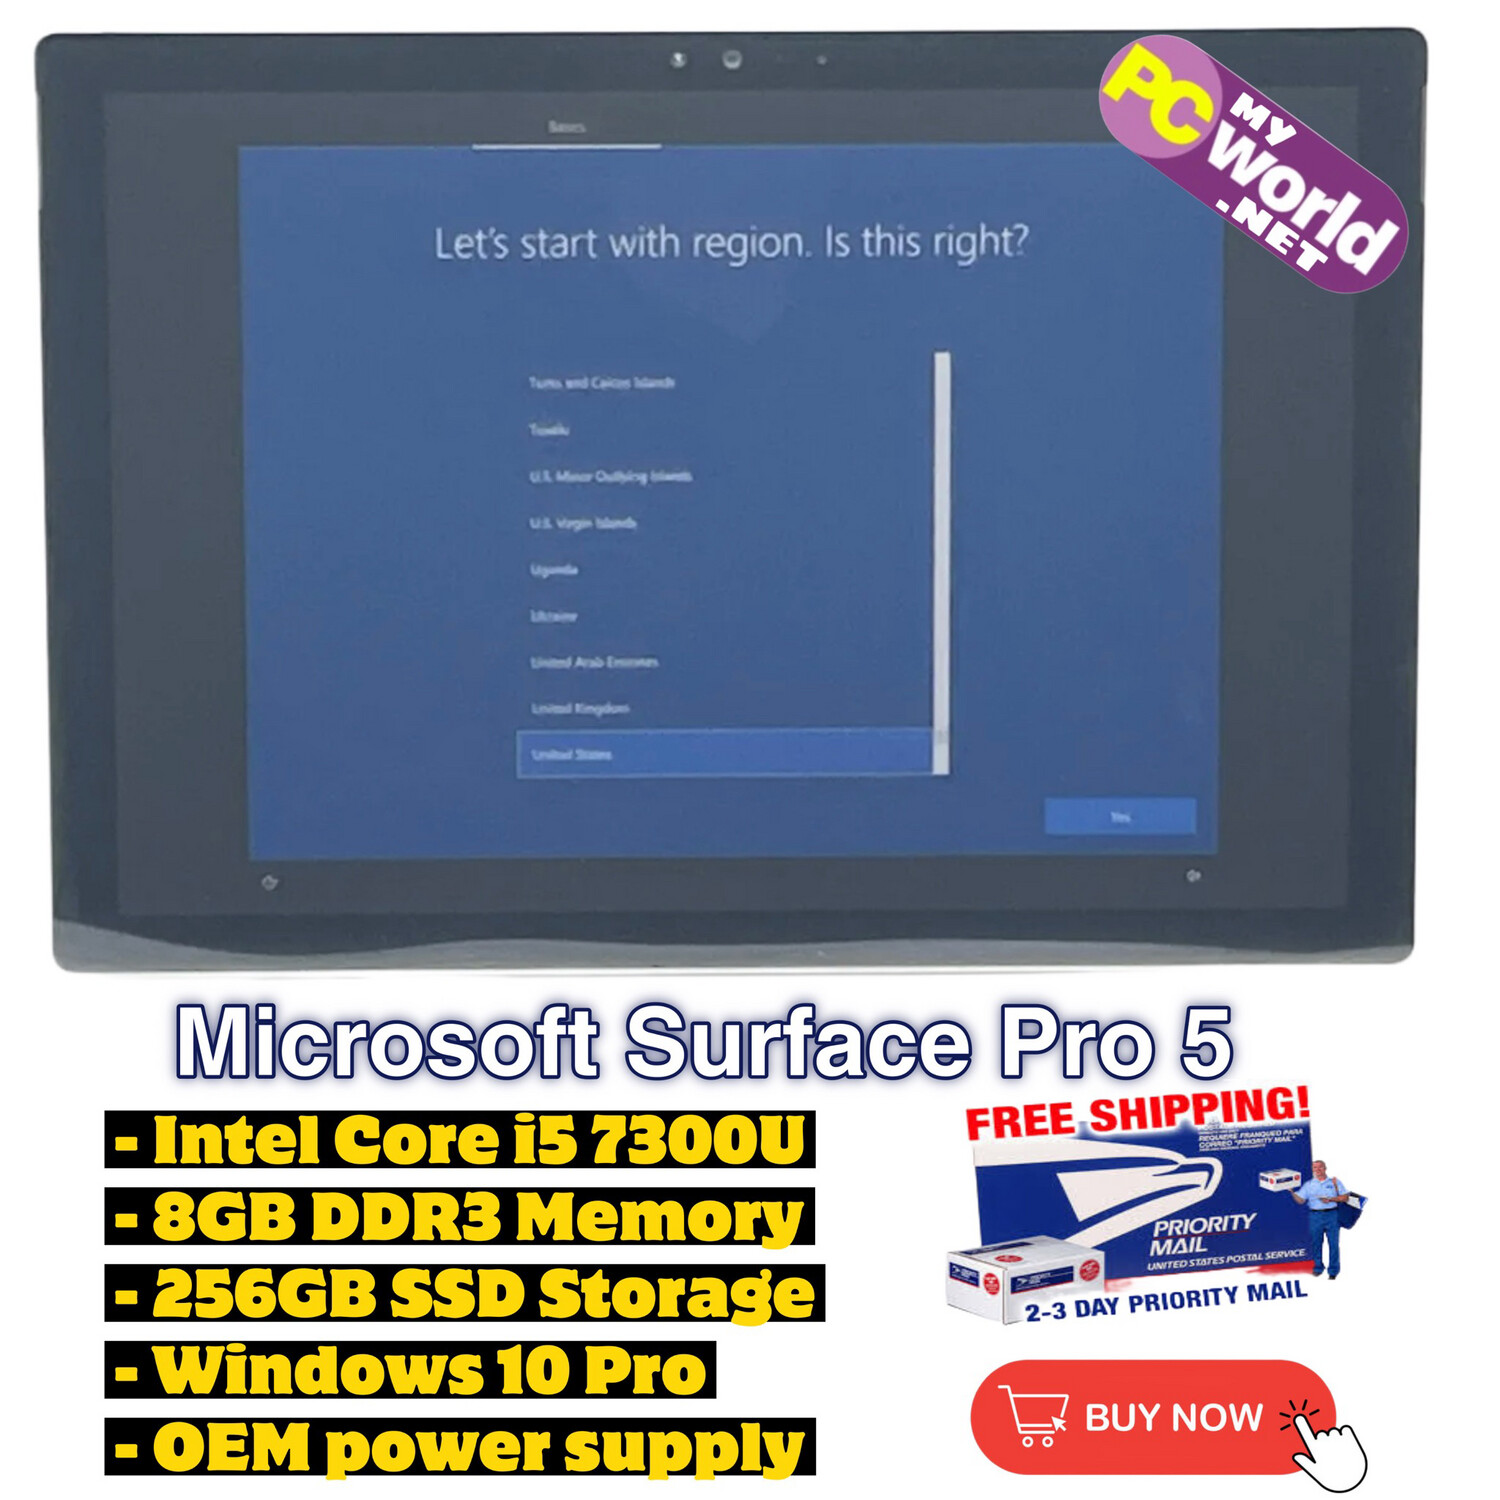 Microsoft Surface Pro 5 - Intel Core i5 7300U, 8GB DDR3, 256GB SSD, Windows 10